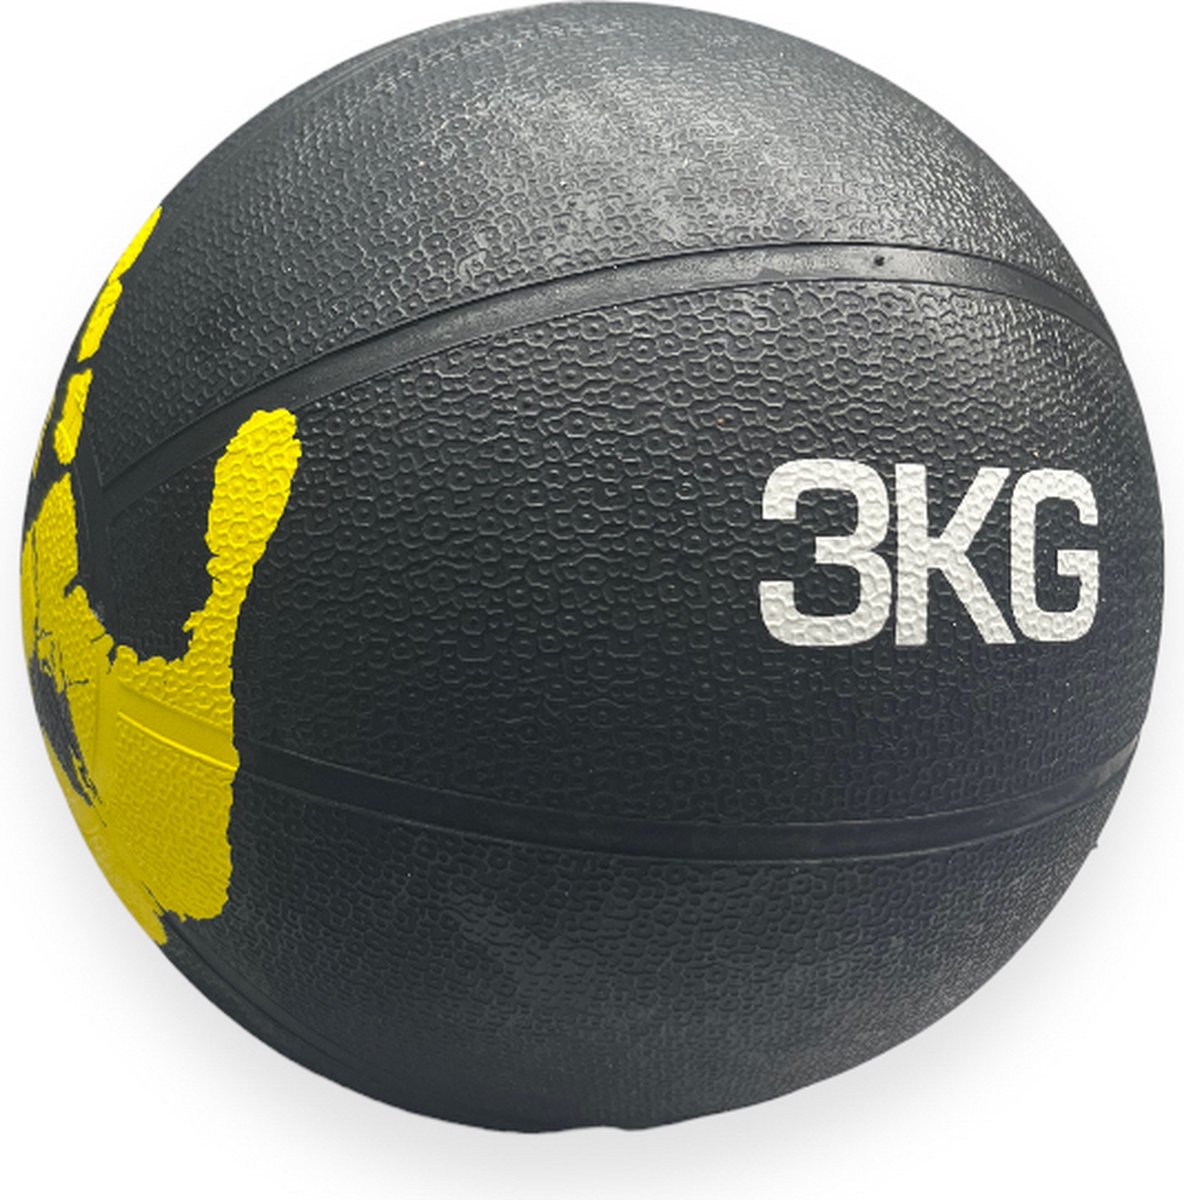 Padisport - Medicijnbal - Medicine Ball - Gewichtsbal - Medicijnbal 3 Kg - Gewichtsbal - Krachtbal - Krachtbal 3 Kg